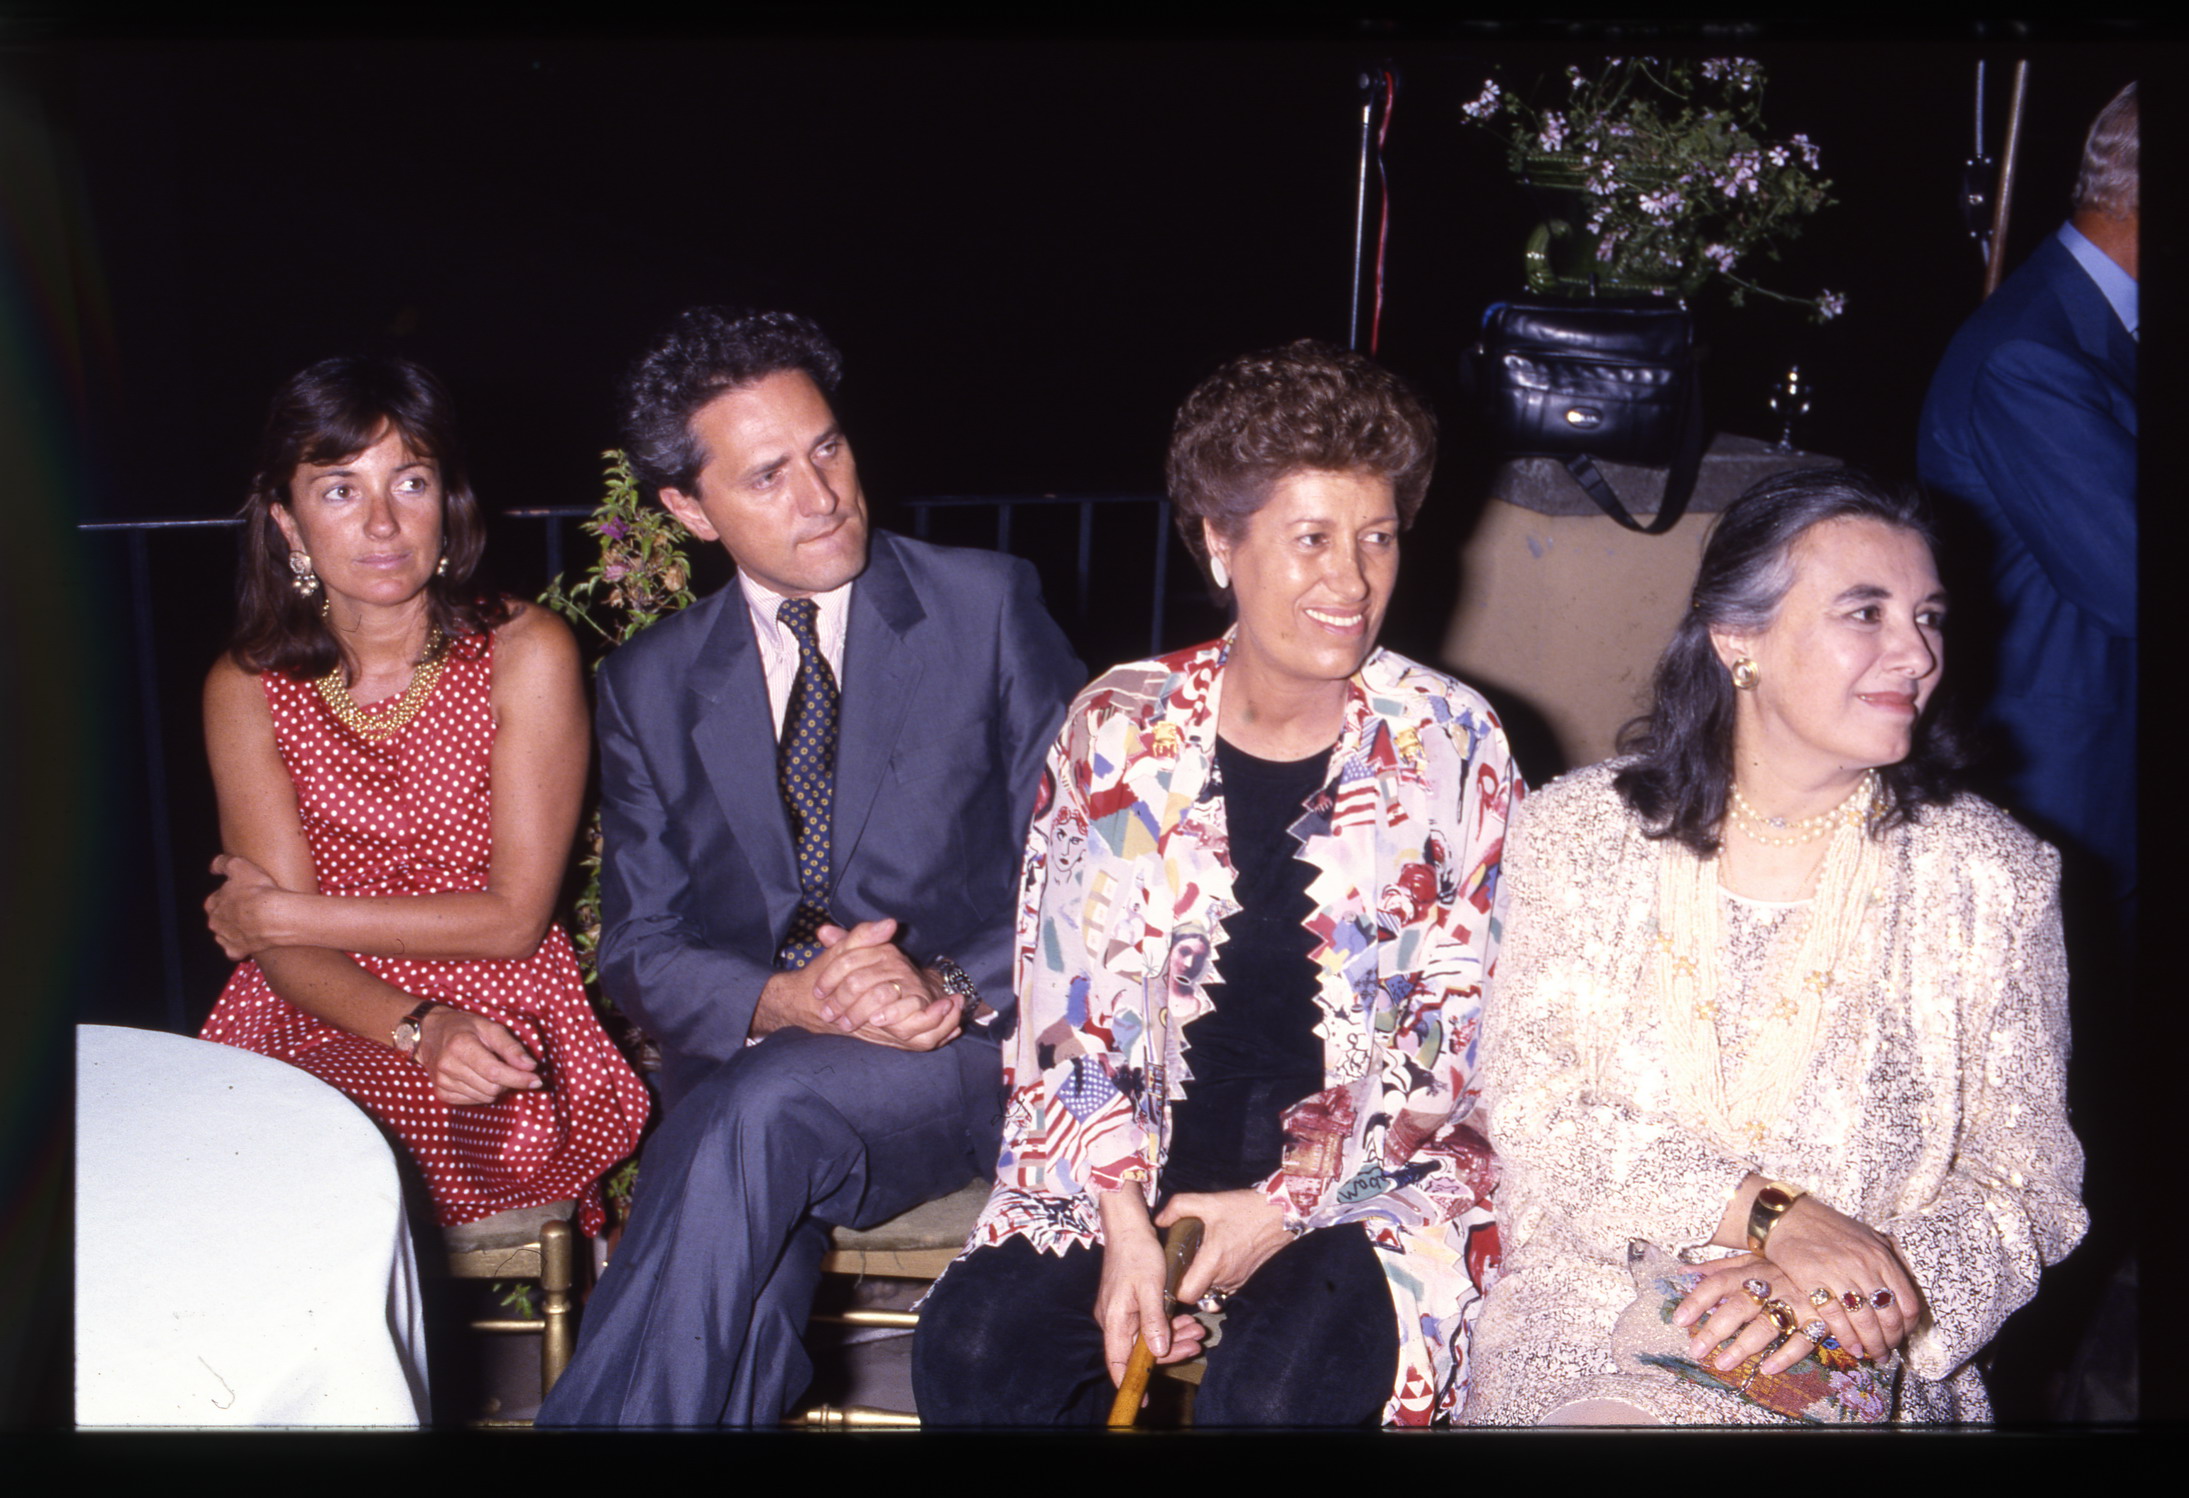 Francesco Rutelli, Barbara Palombelli, Carla Fendi e Laura Biagiotti